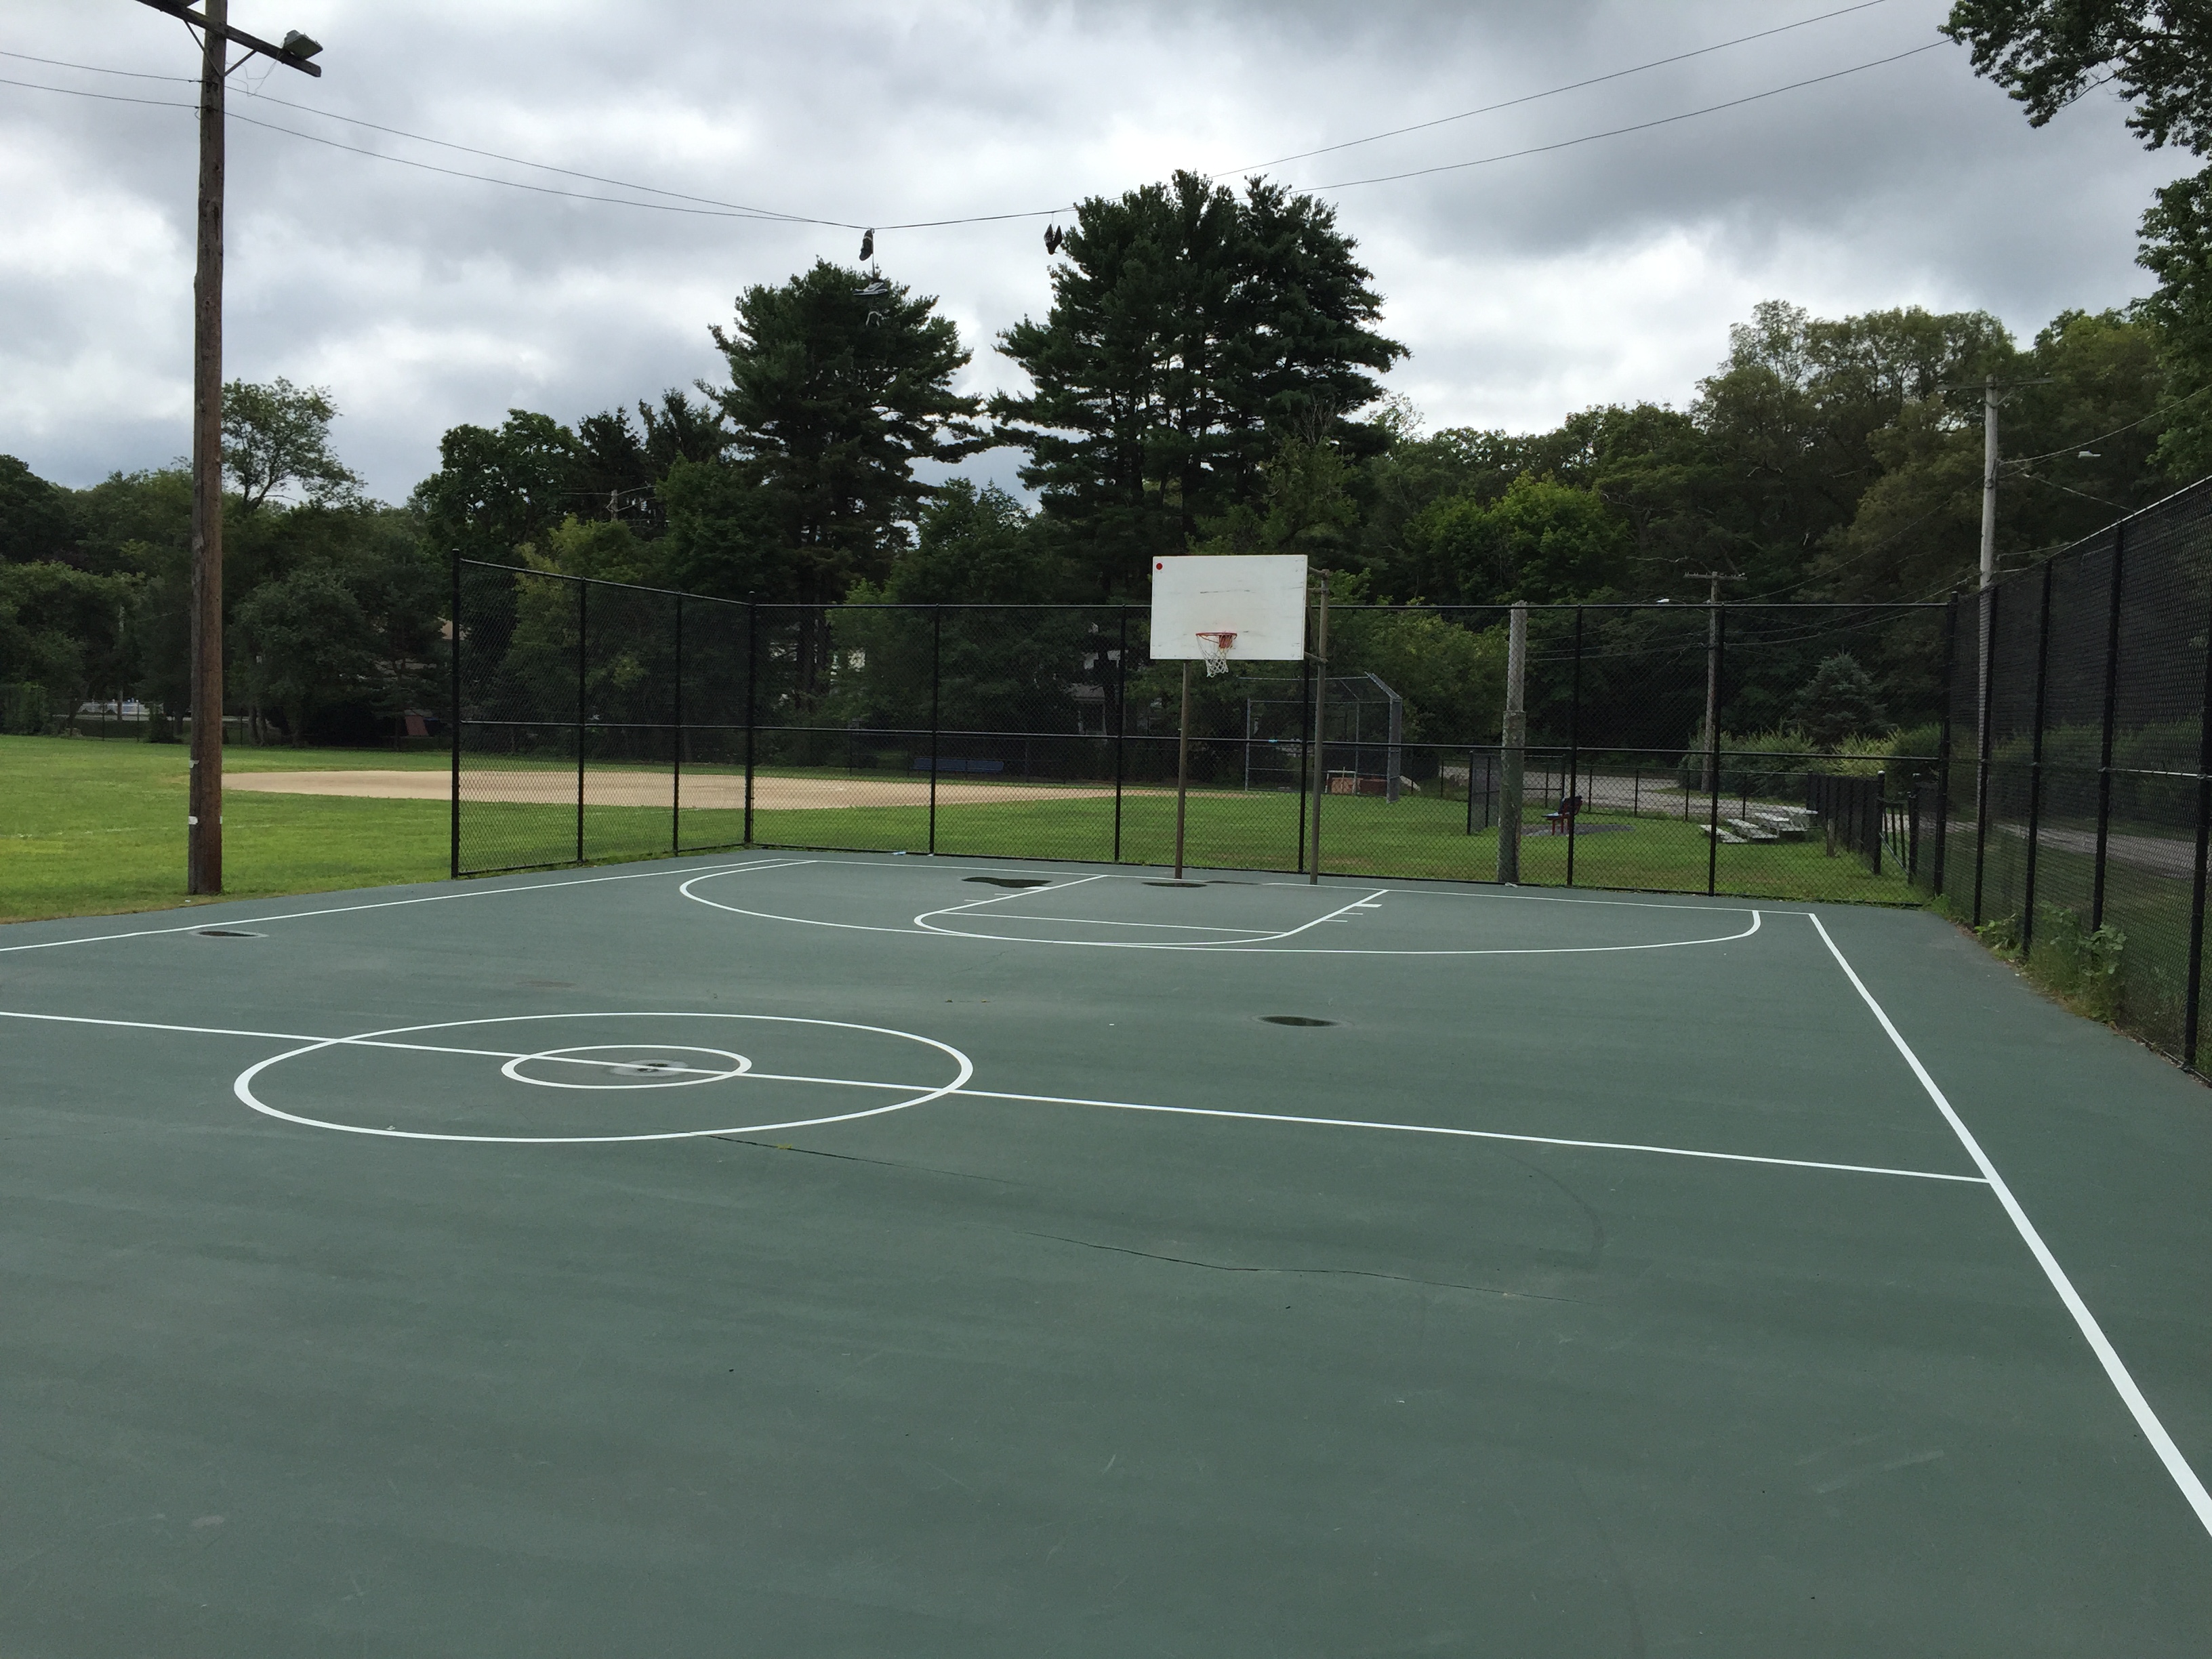 Free photo: Outdoor Basketball Court Basket Court Hoop Free